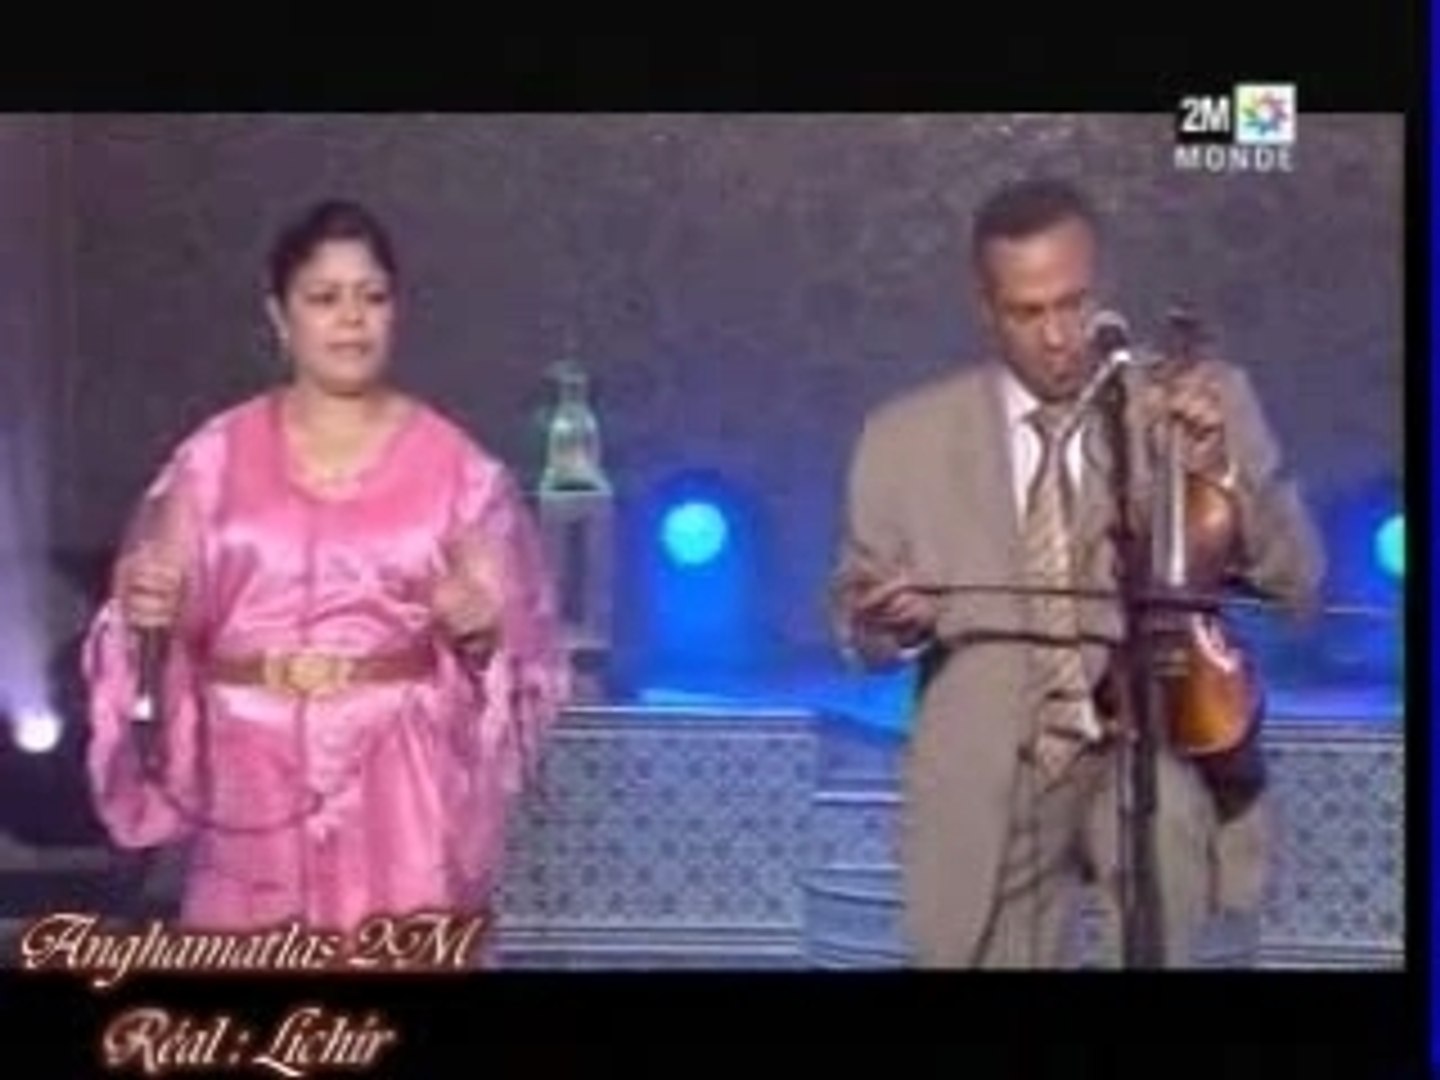 Kamal el abdy - - 3alwa - - Maroc- - chaabi - Vidéo Dailymotion